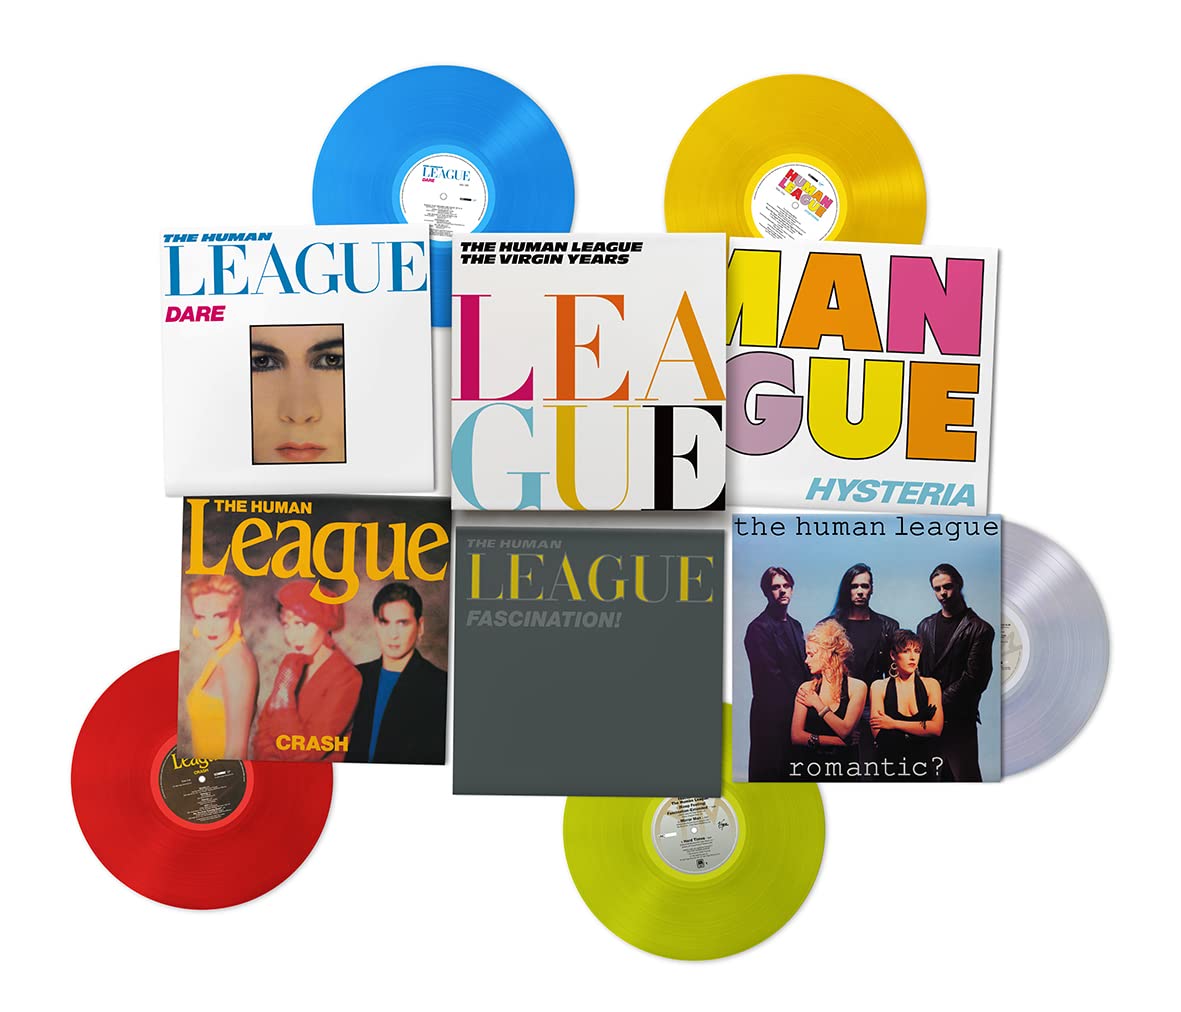 he Human League Releasing New 5 Album Box Set Of Their Work Between 1981-1990